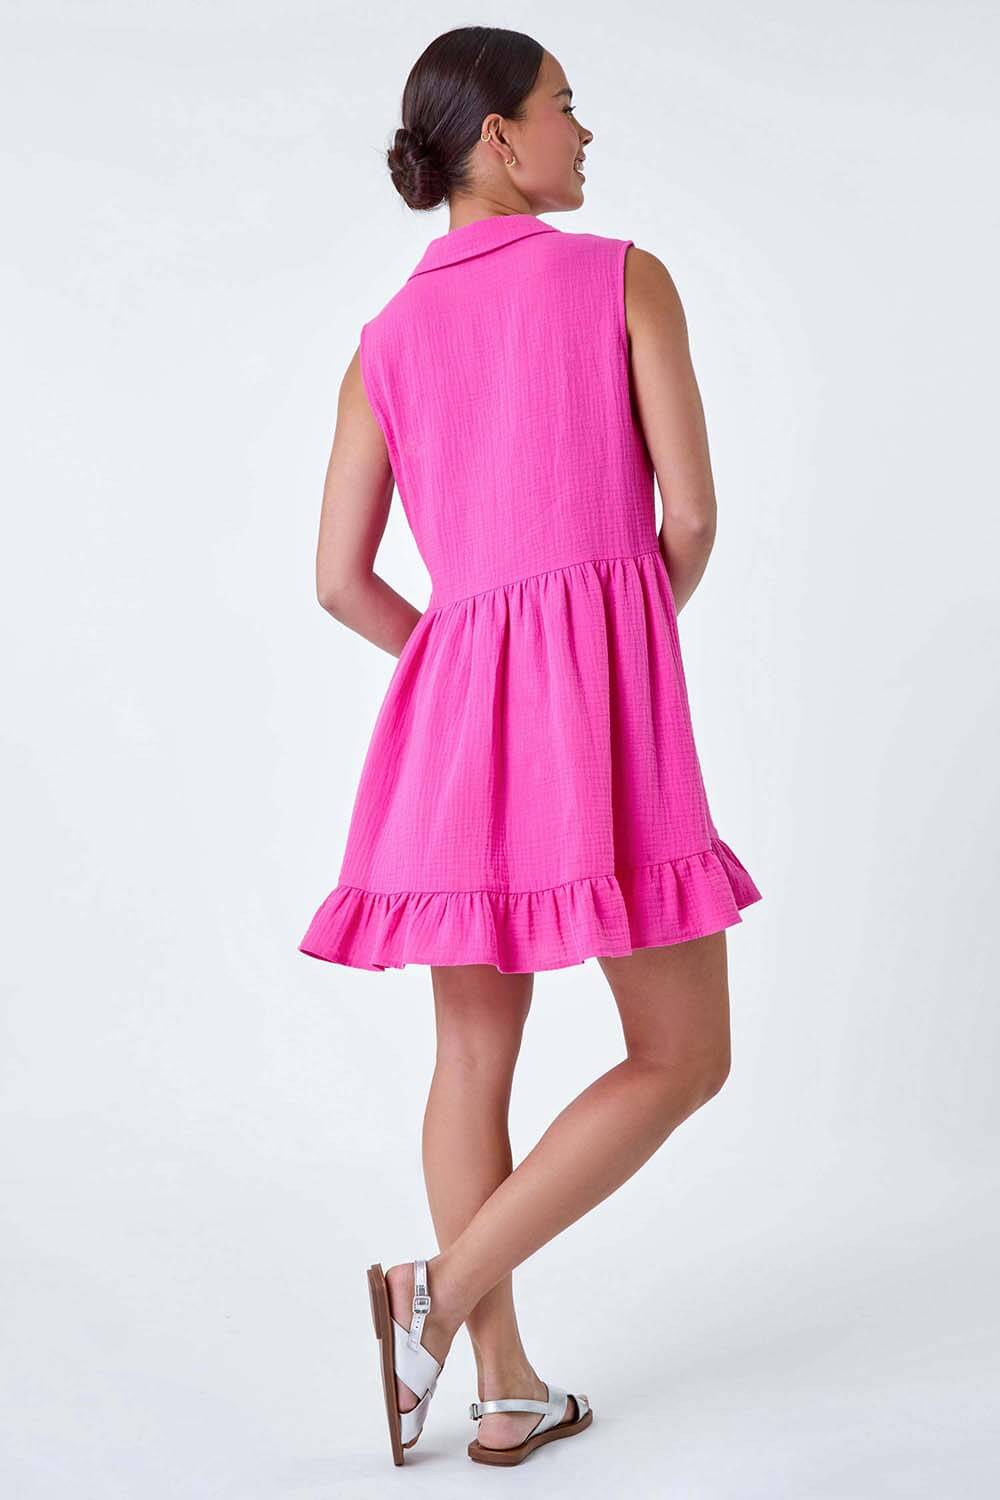 PINK Petite Textured Cotton Frill Tunic Dress, Image 3 of 5